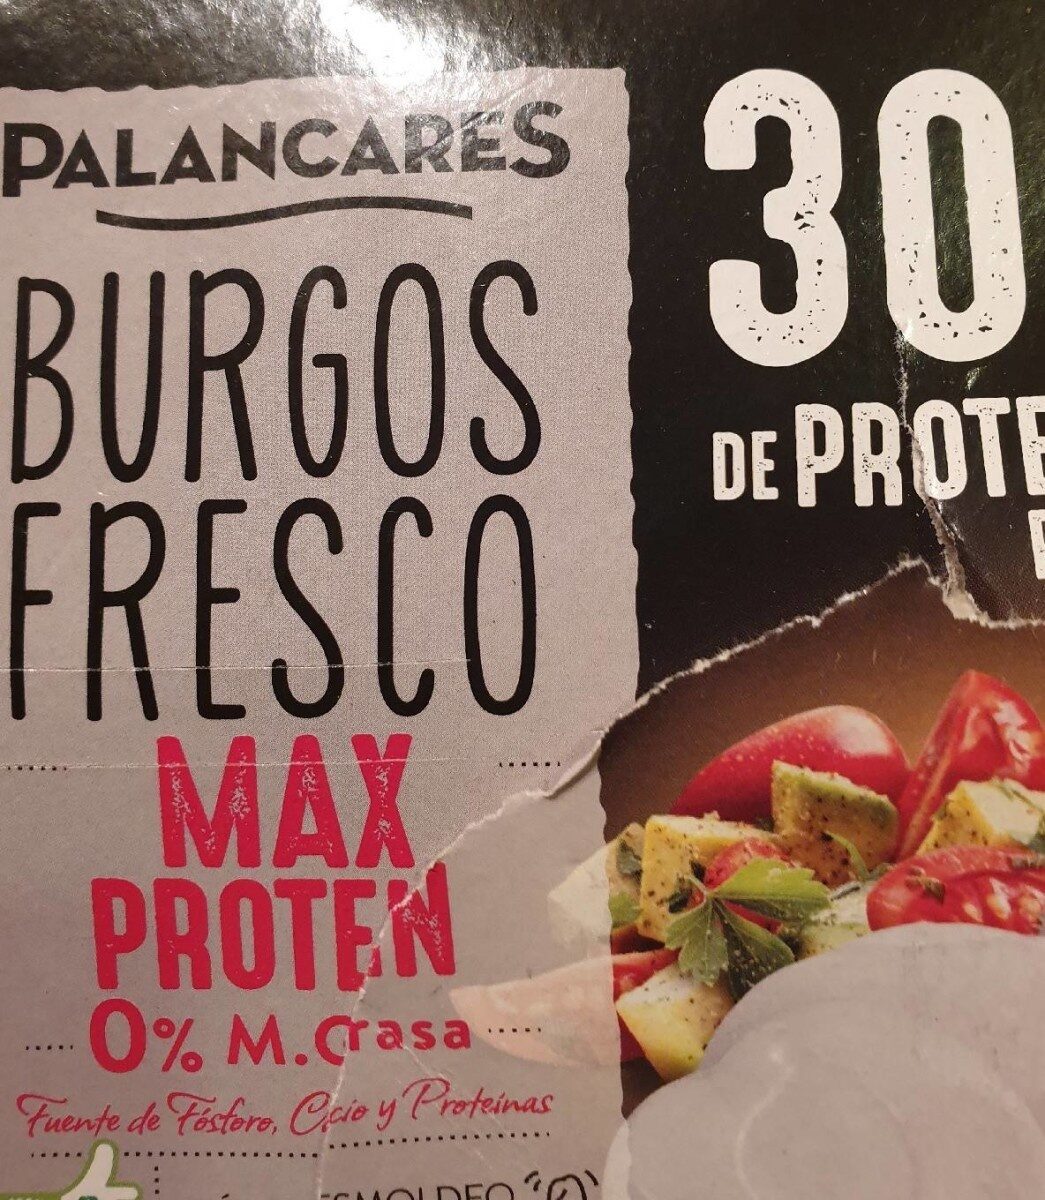 Queso Burgos fresco Max protein - Product - es